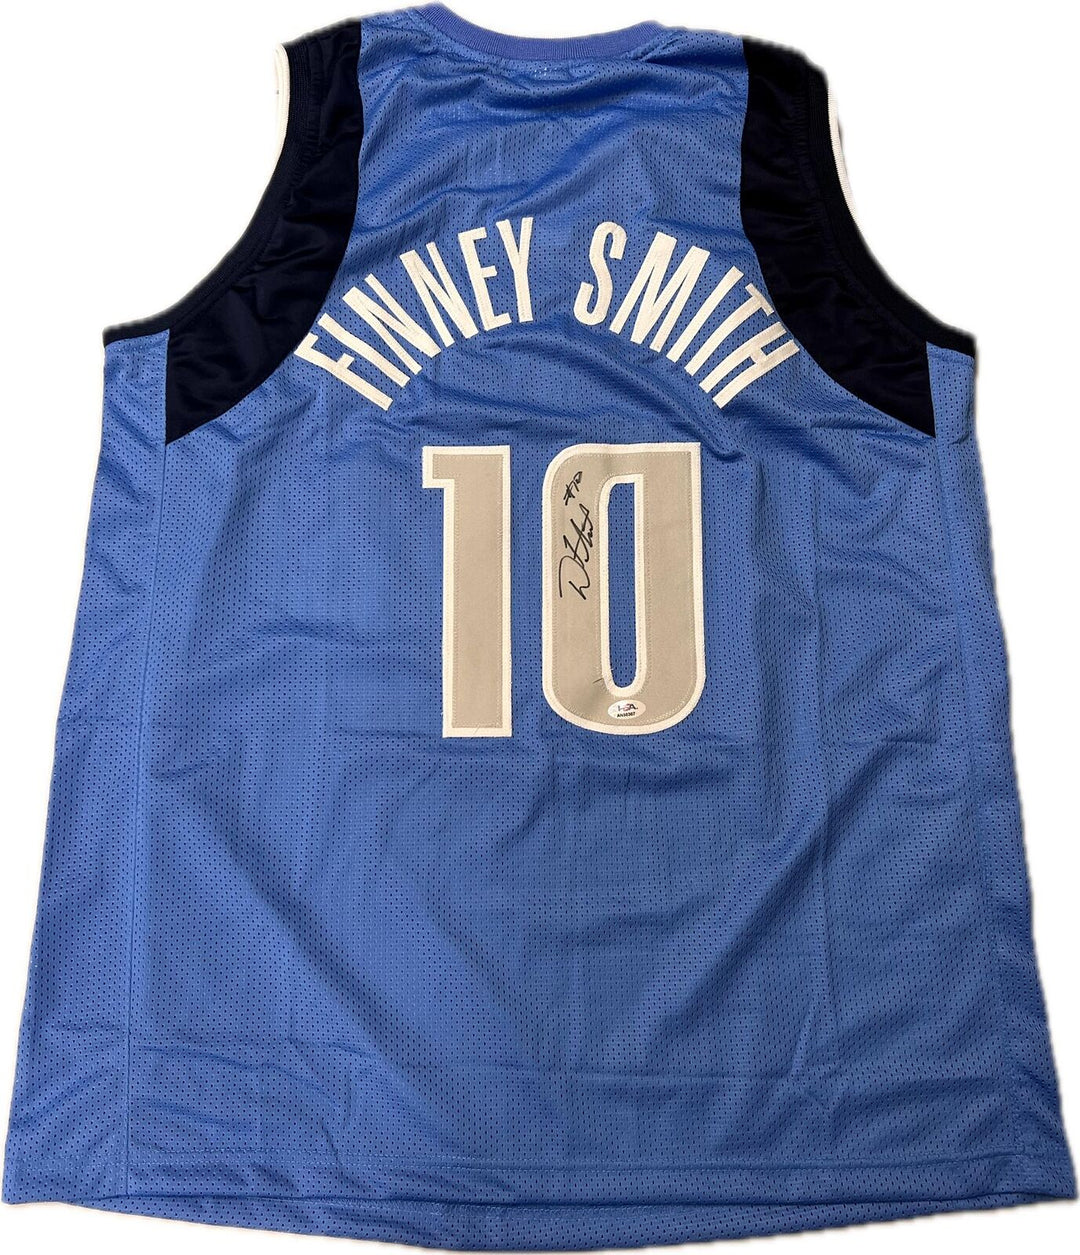 Dorian Finney-Smith signed jersey PSA/DNA Dallas Mavericks Autographed Image 1